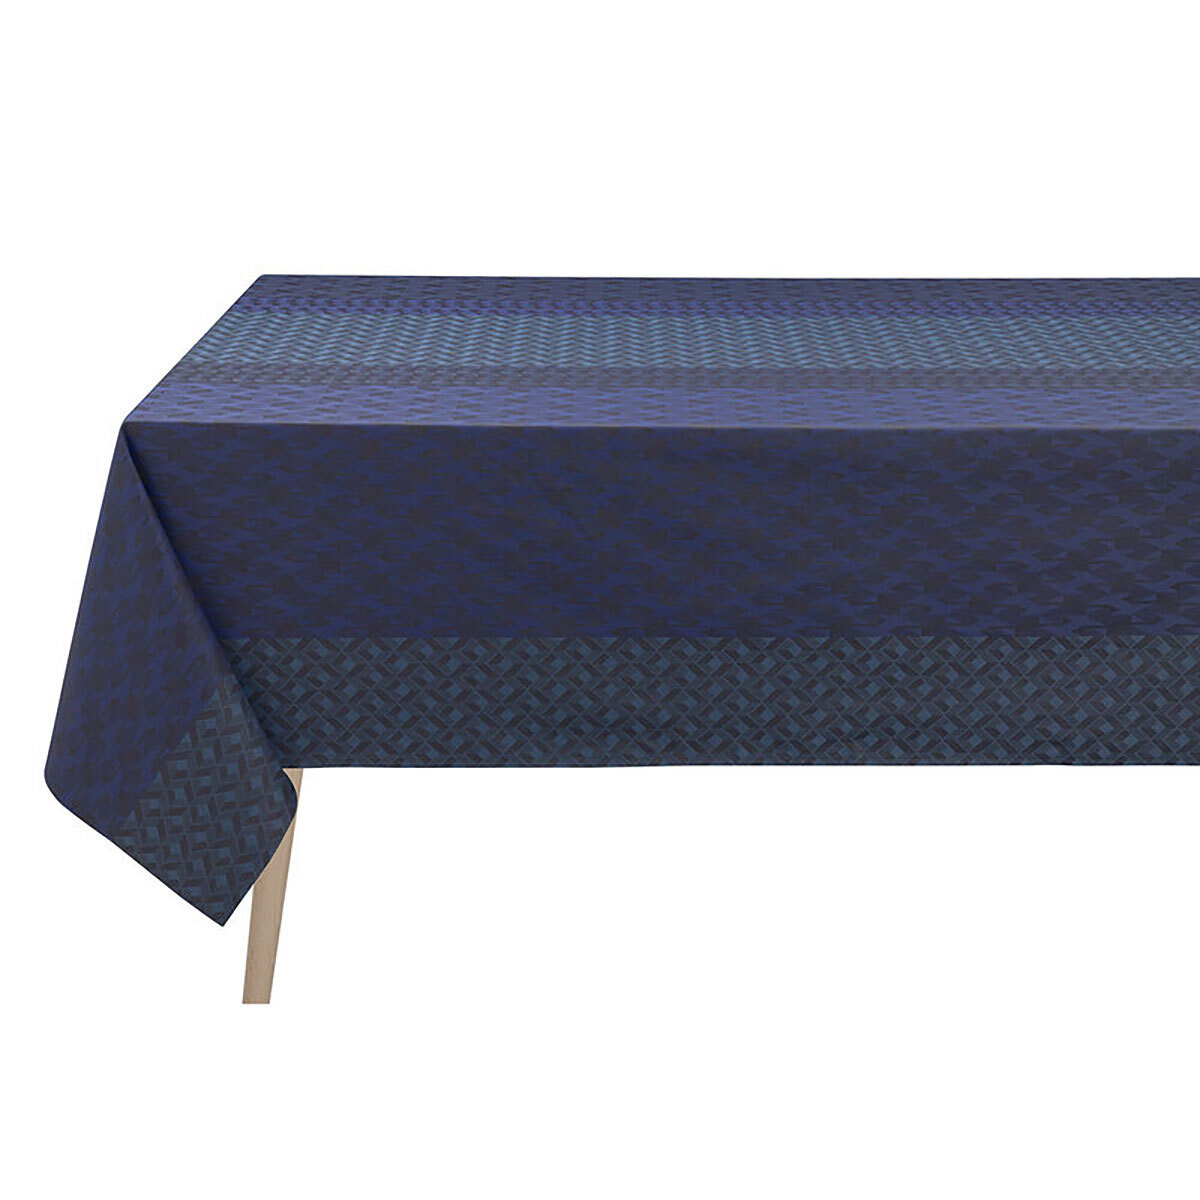 Le Jacquard Francais Tablecloth Caractere Blue 100% Coated Cotton 69 x 126 Inch 28214